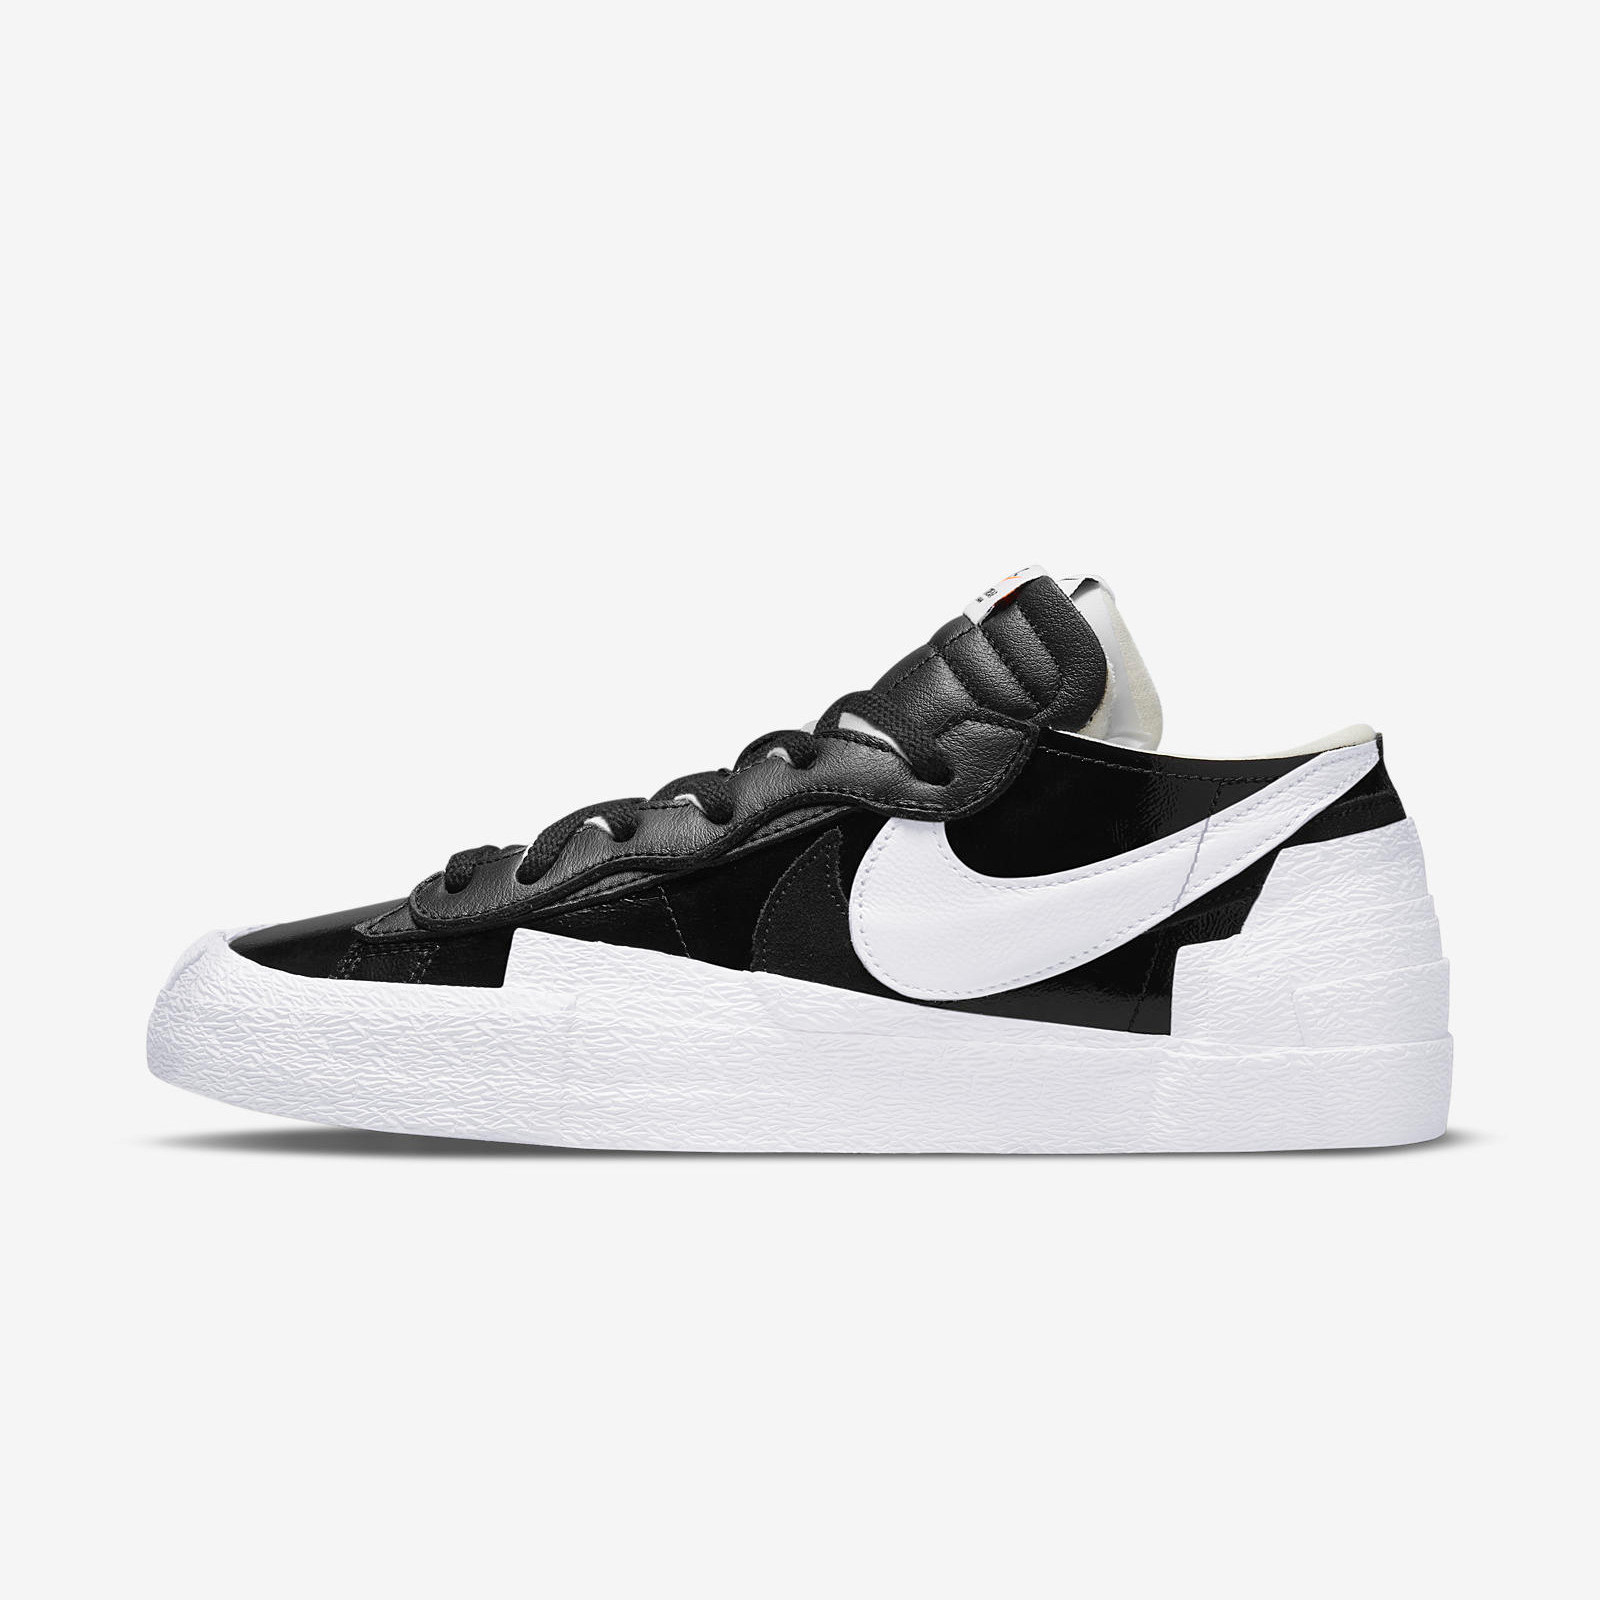 Nike x Sacai
Blazer Low
Black / White